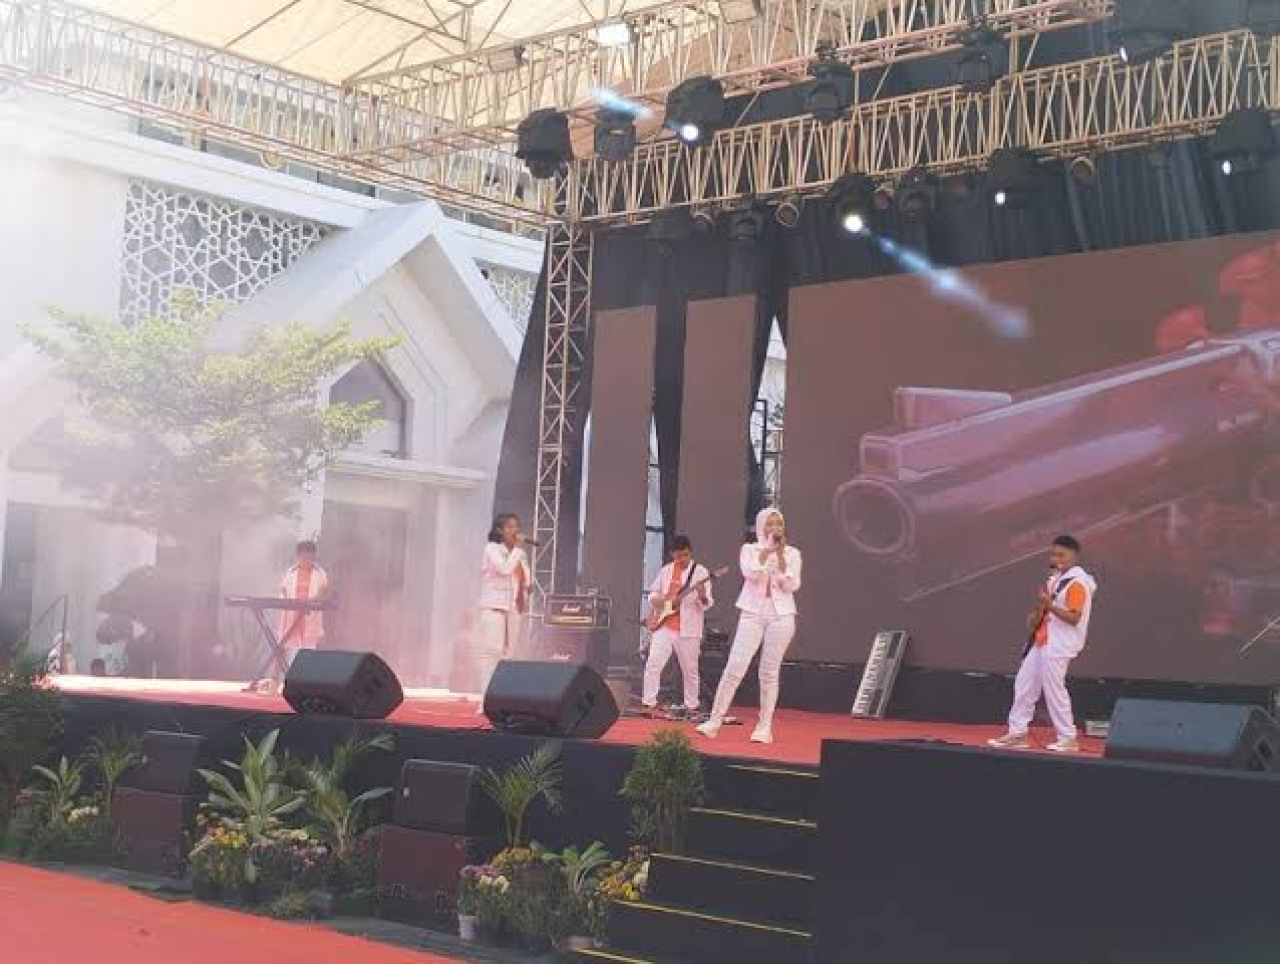 DPRD Surabaya Tegaskan Konser di Balai Pemuda Harus Berhenti Sebelum Adzan